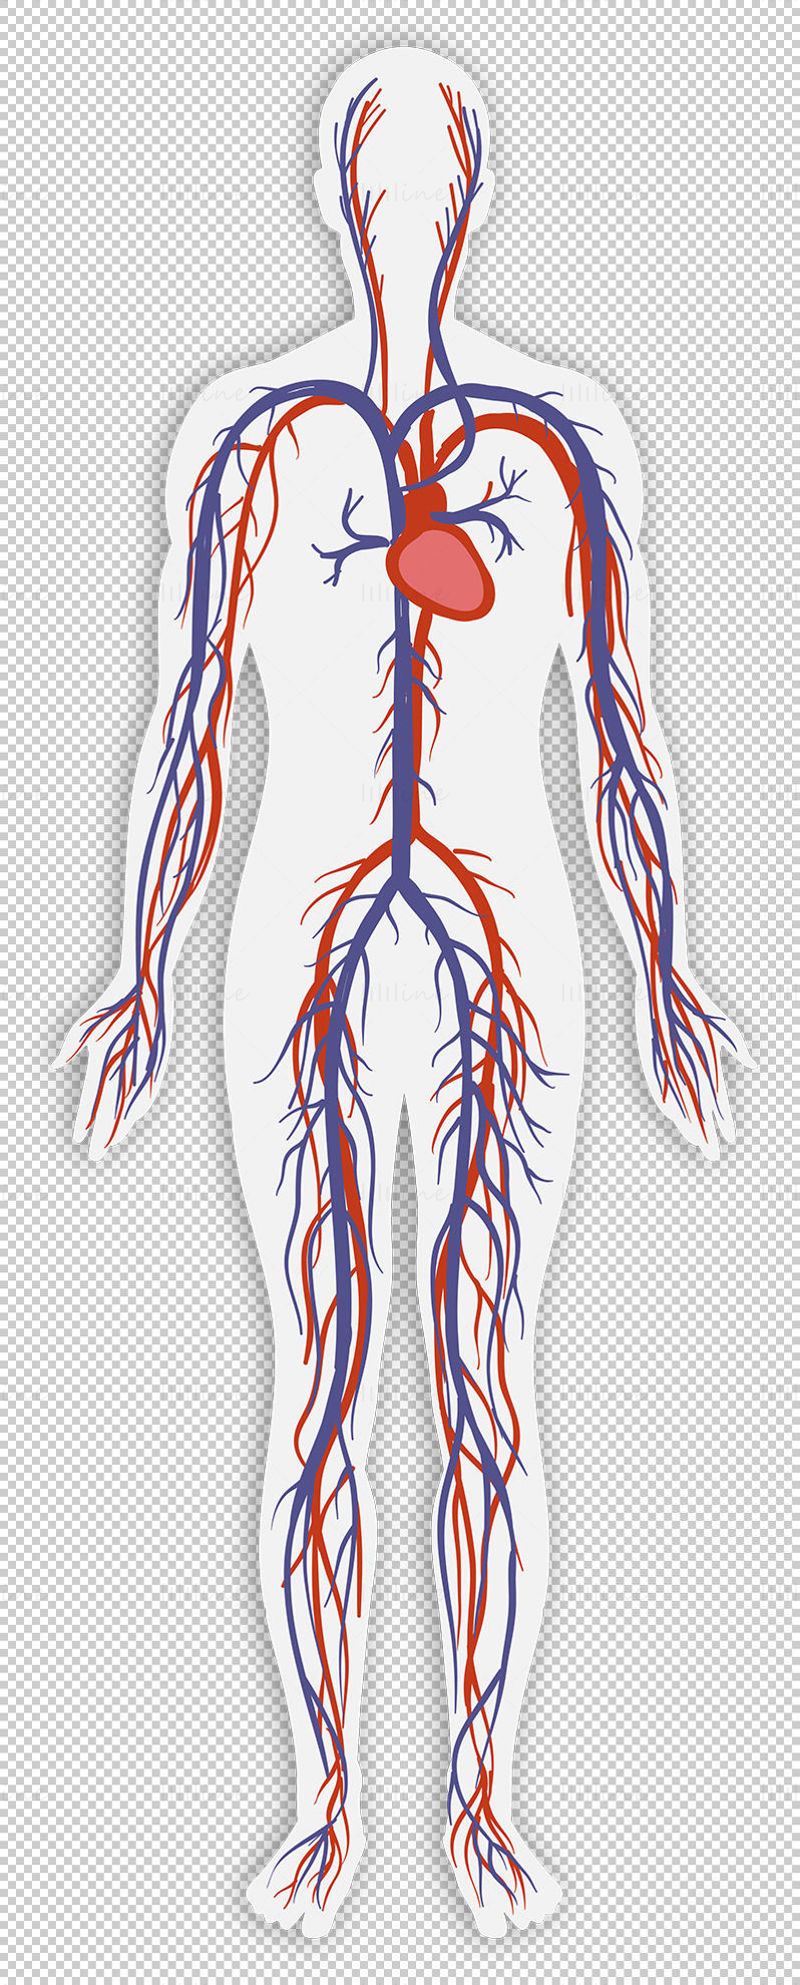 Adult circulatory system vector illustration